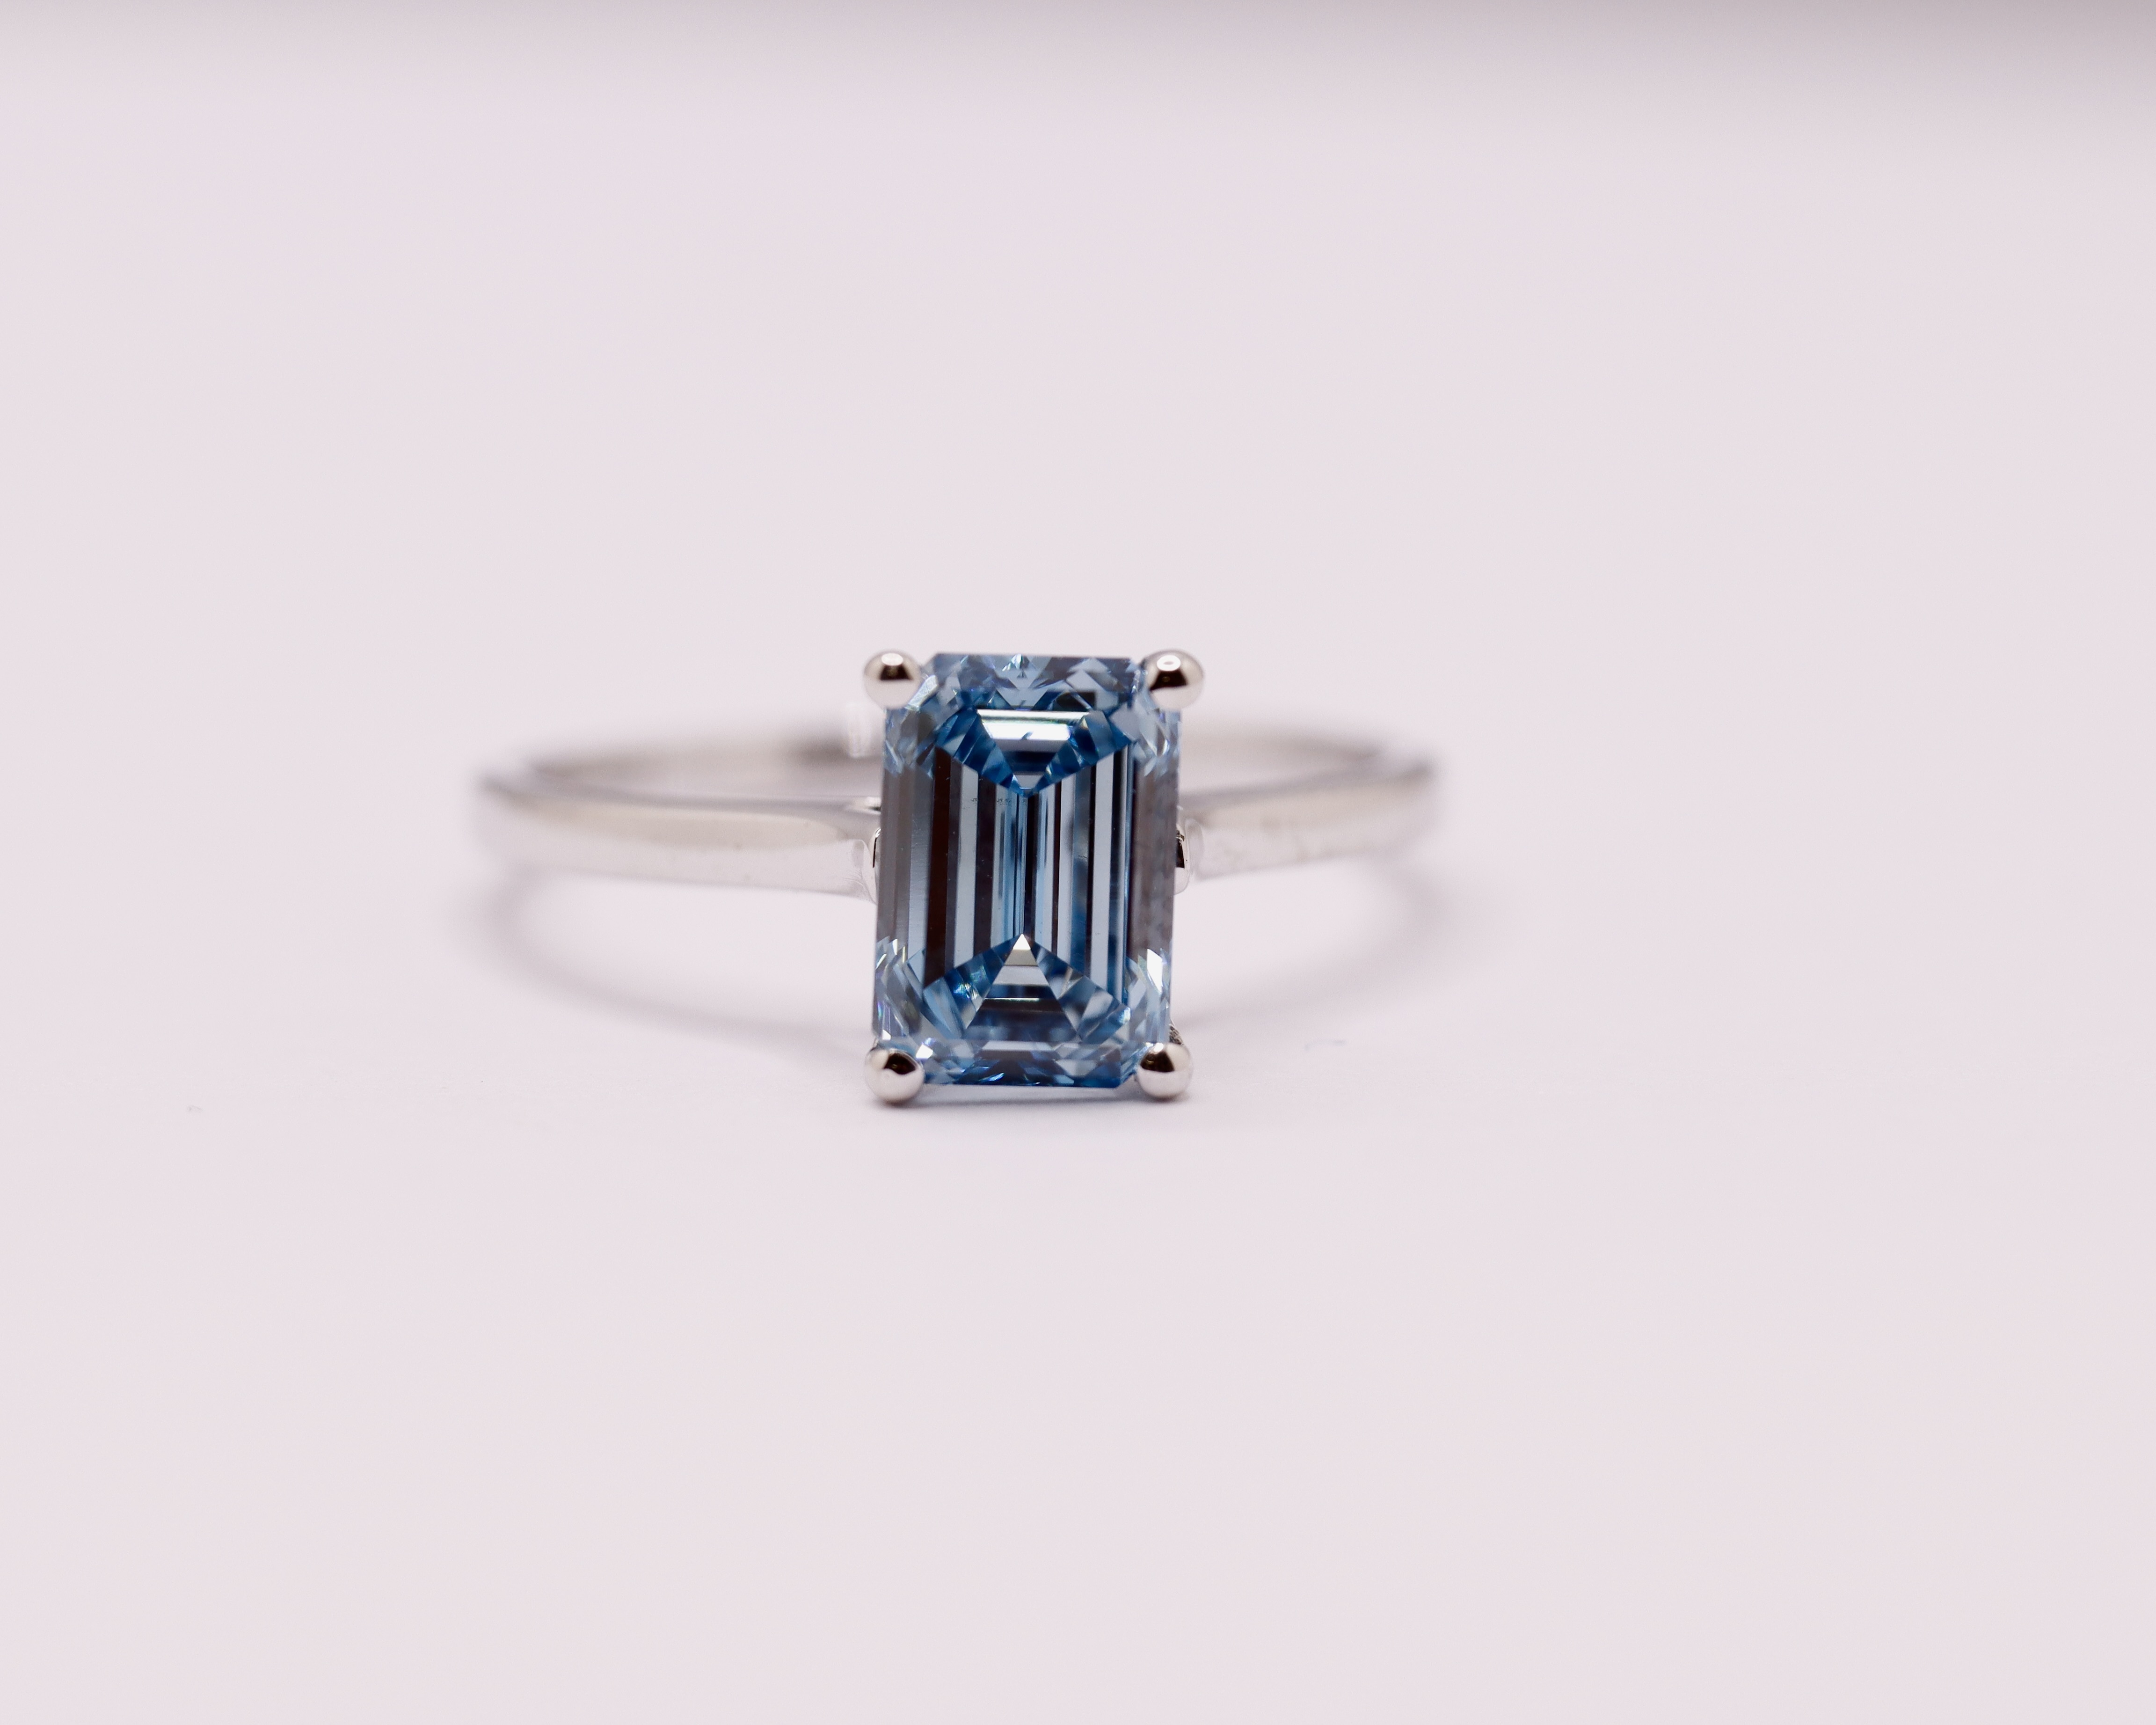 ** ON SALE ** Fancy Blue Emerald Cut 1.50 Carat Diamond 18Kt White Gold Ring -VS1 Clarity